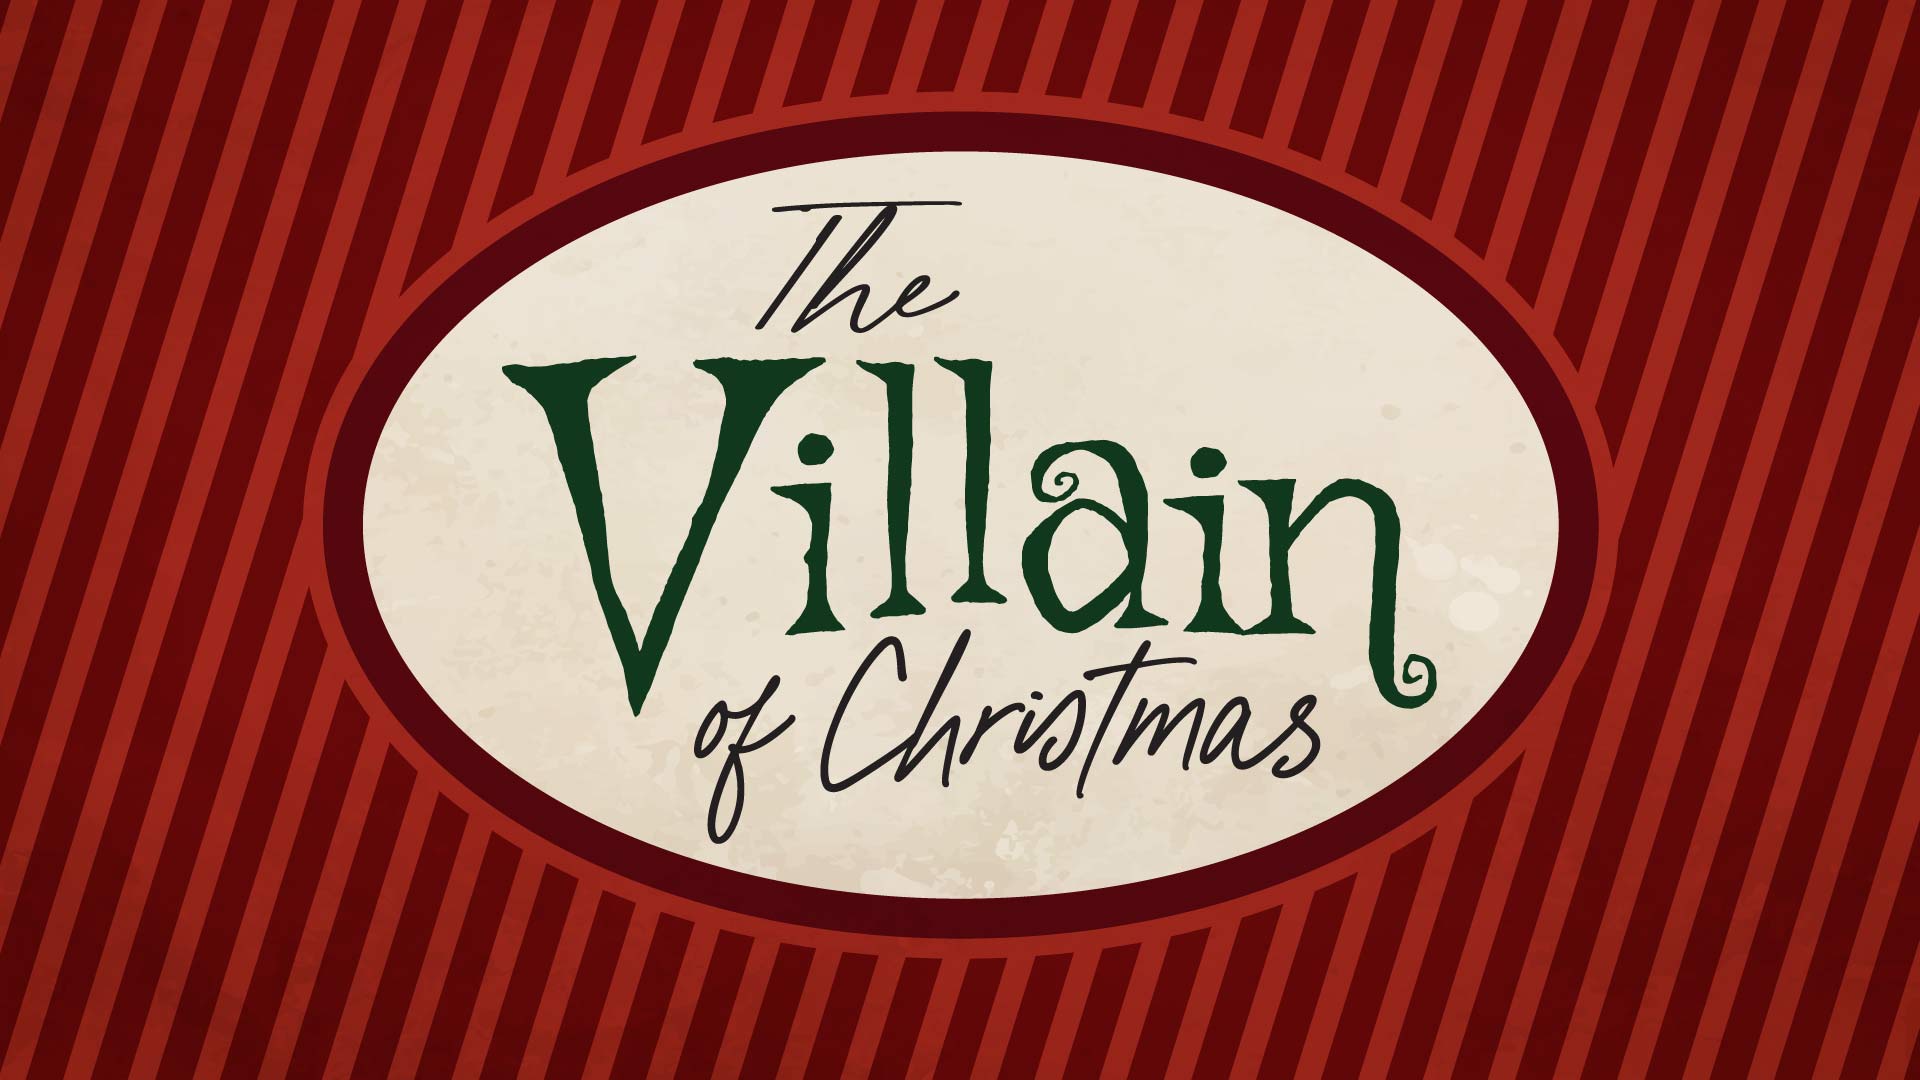 The Villain of Christmas